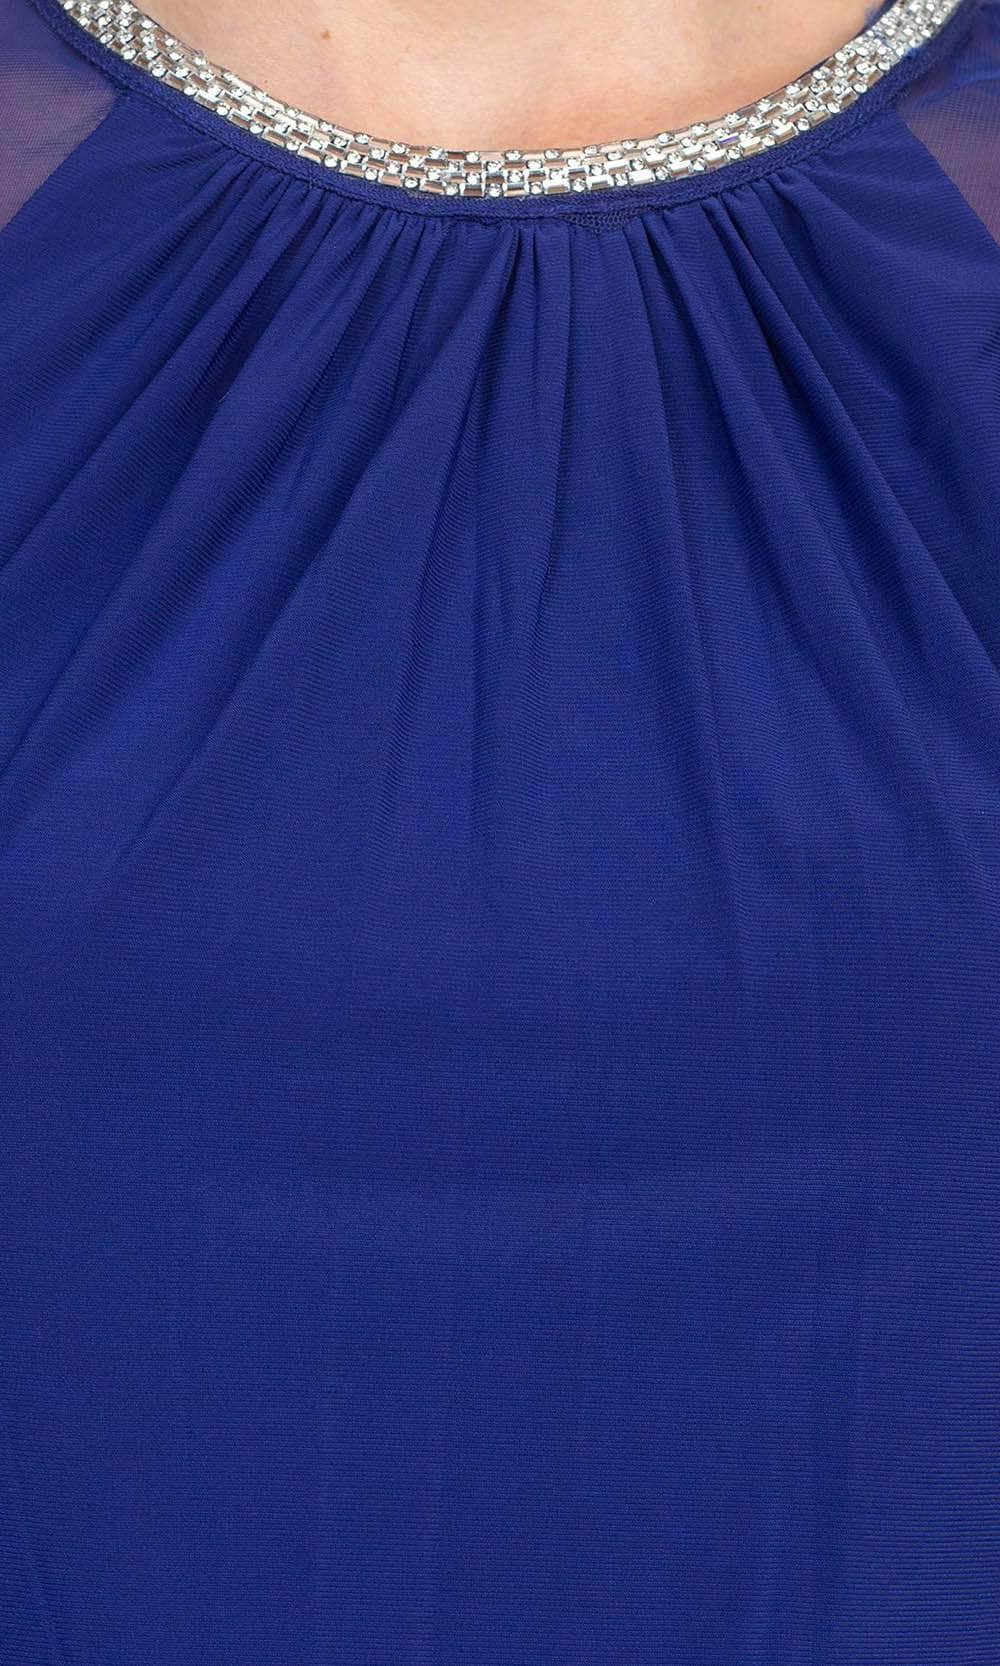 Black R&M Richards 2496 Short Mother Of The Bride Dress for $59.99 – The  Dress Outlet